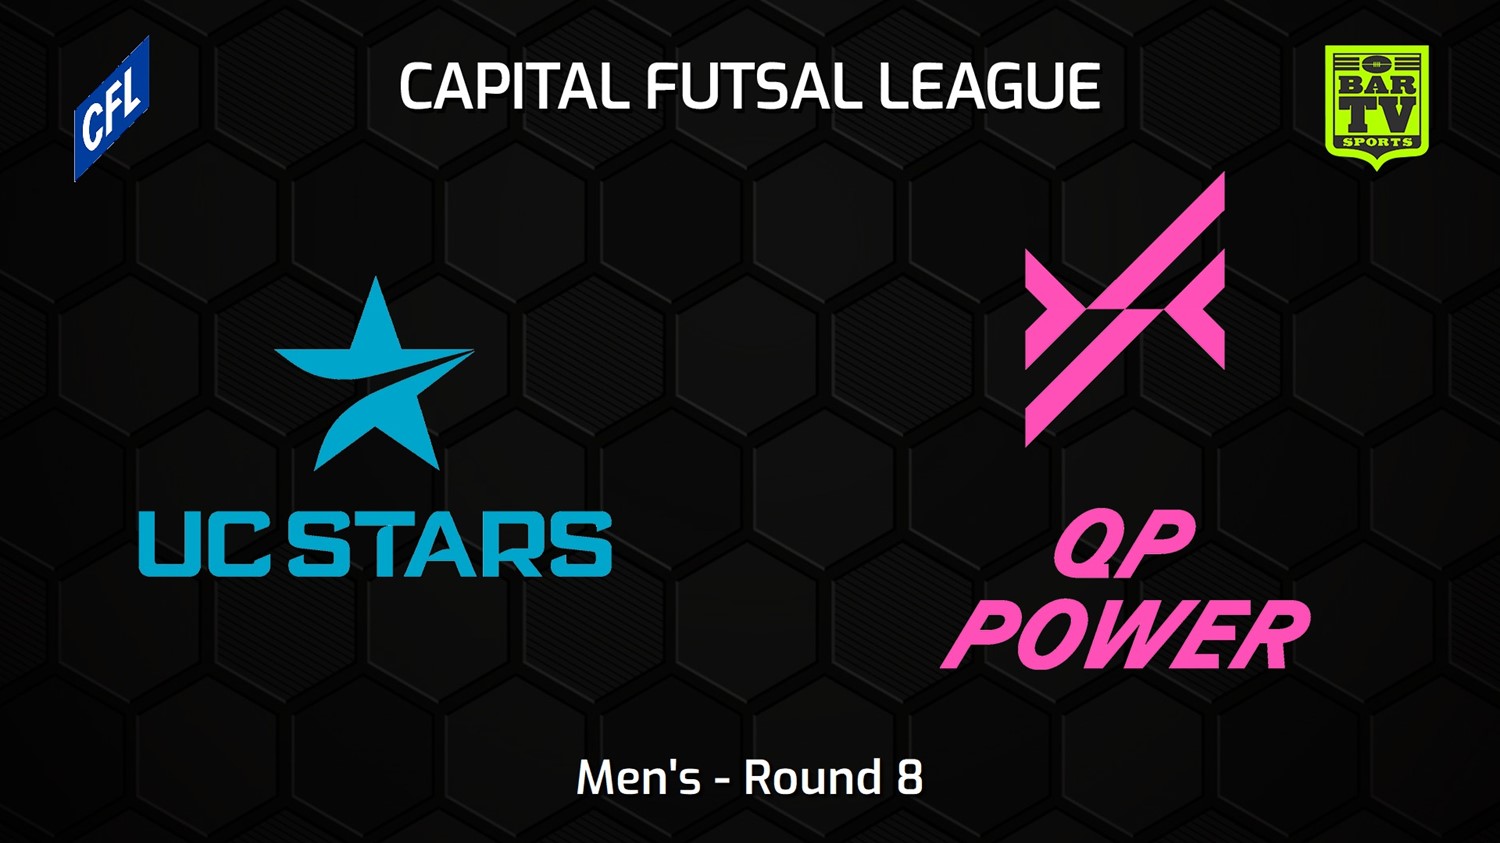 221218-Capital Football Futsal Round 8 - Men's - UC Stars FC v Queanbeyan-Palerang Power Minigame Slate Image